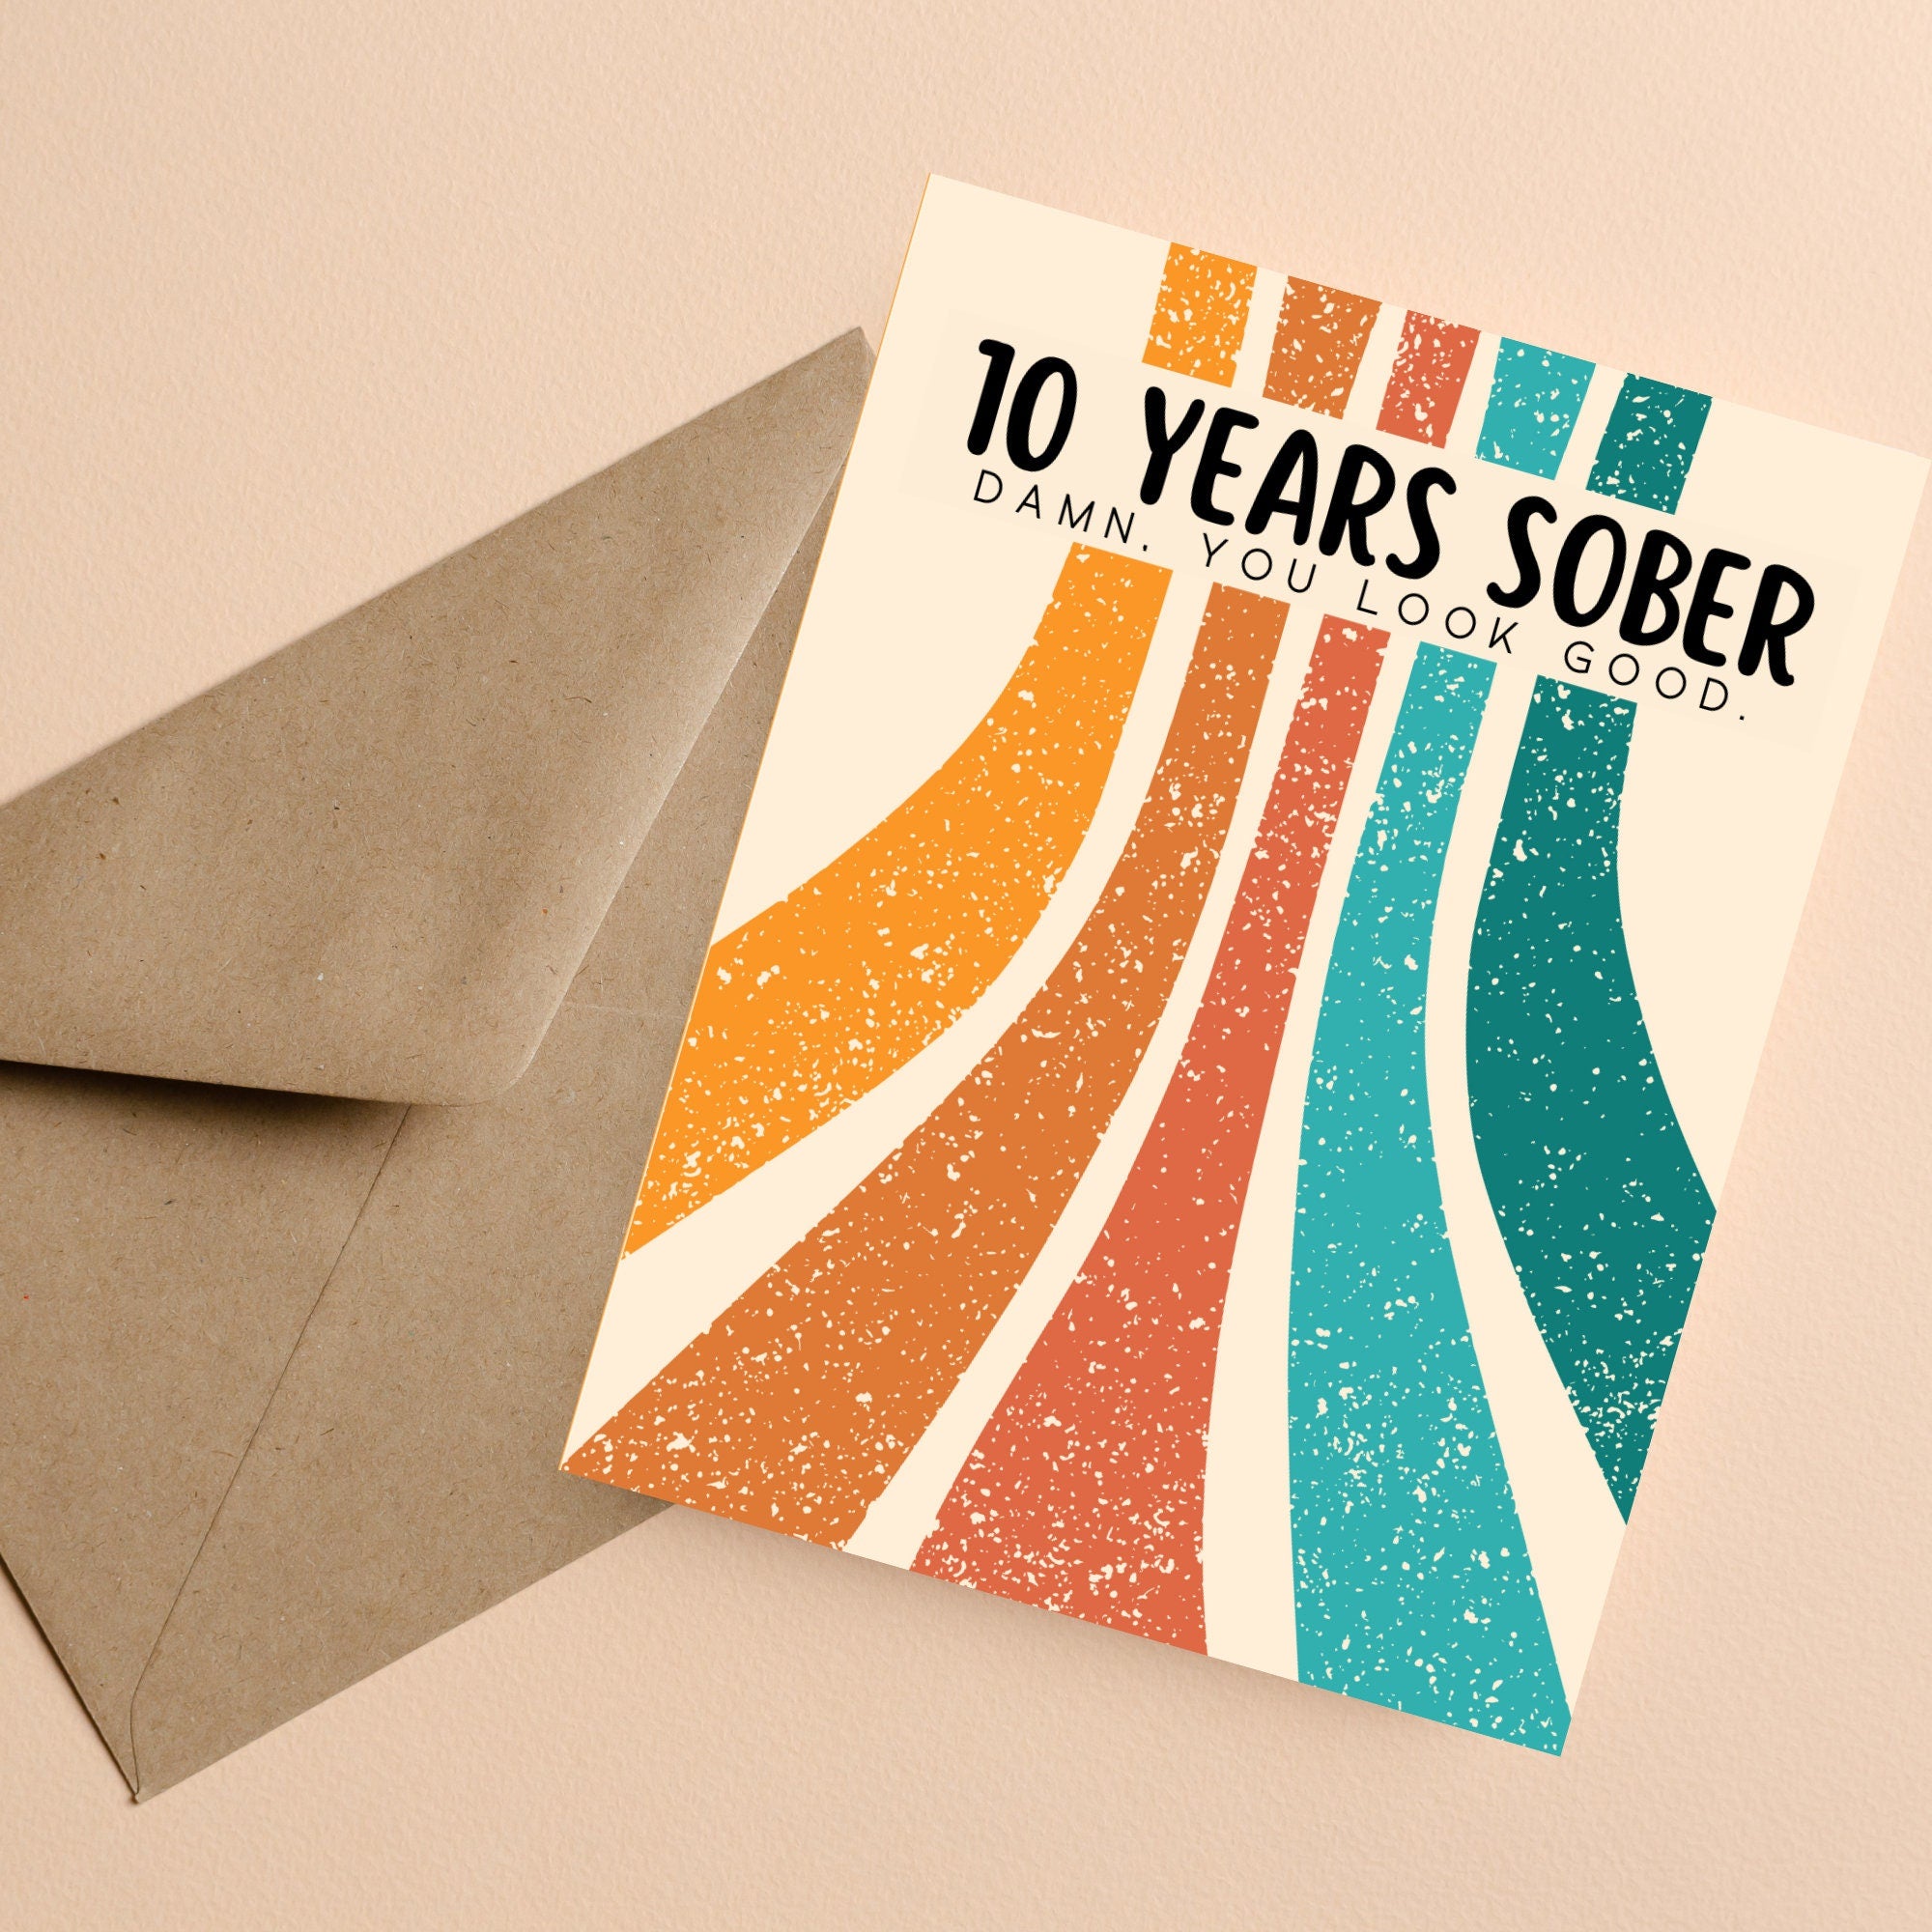 10 Years Sober Card